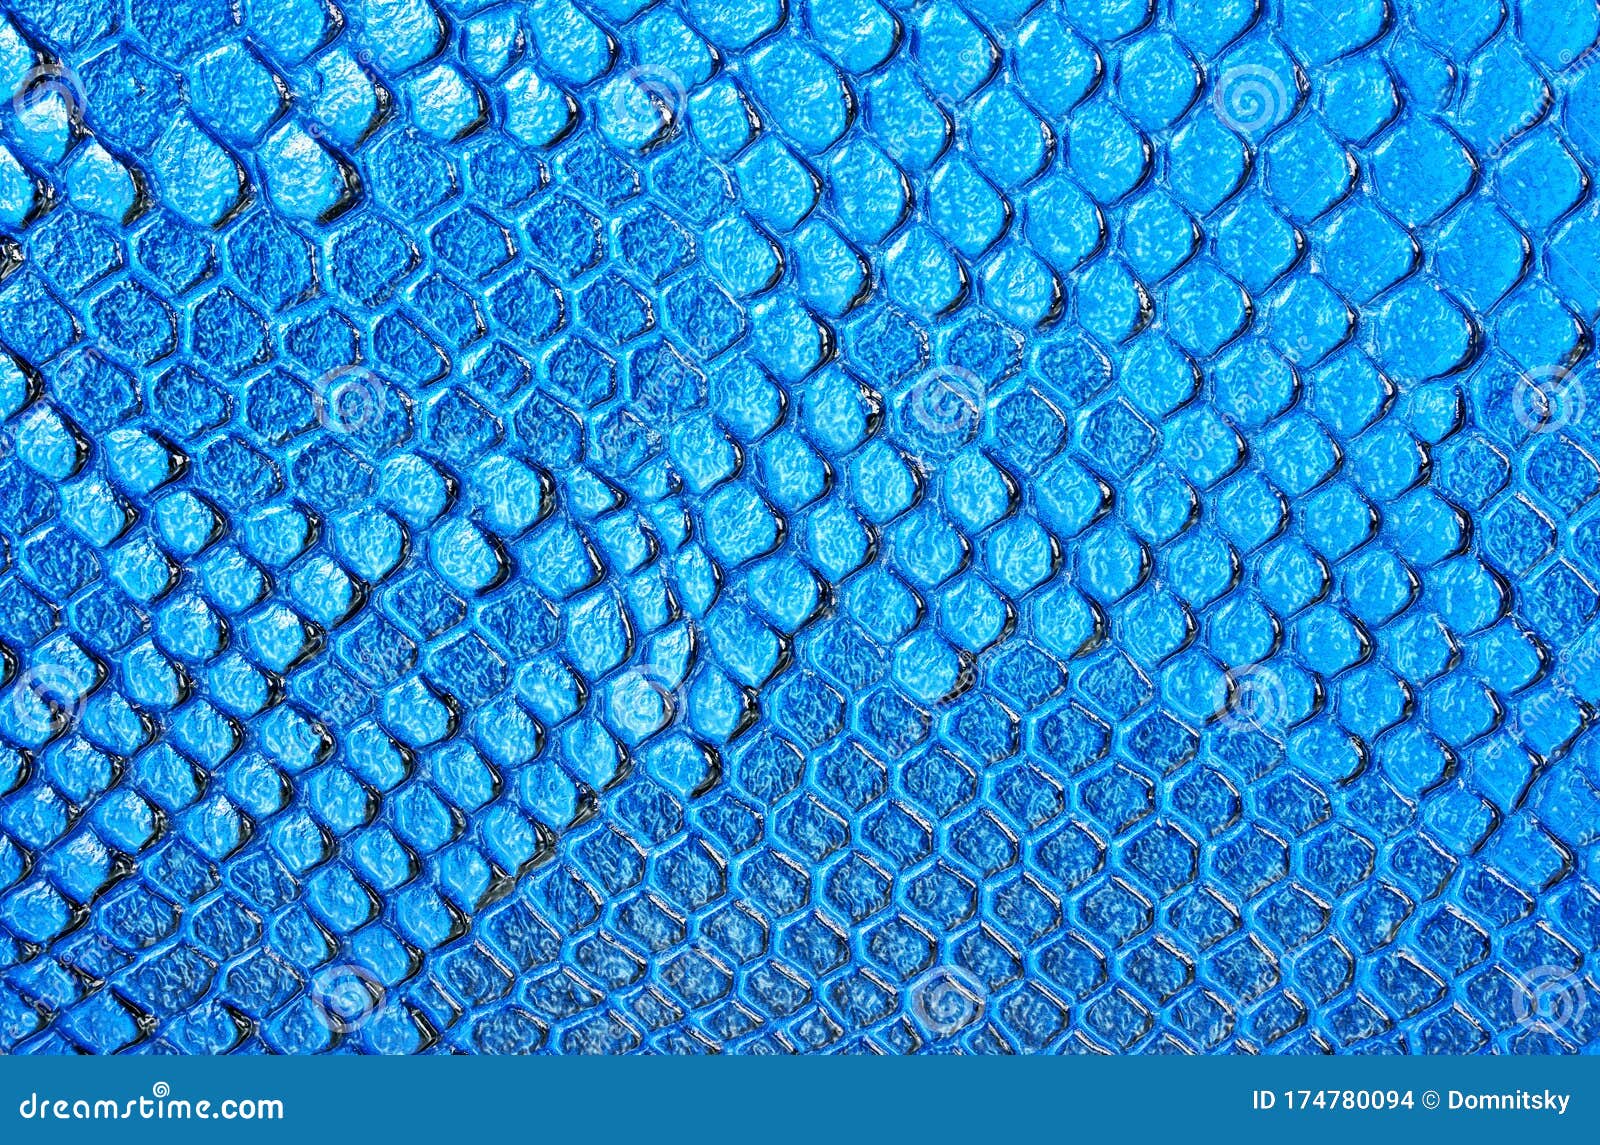 Blue snake skin background stock photo. Image of detail - 174780094